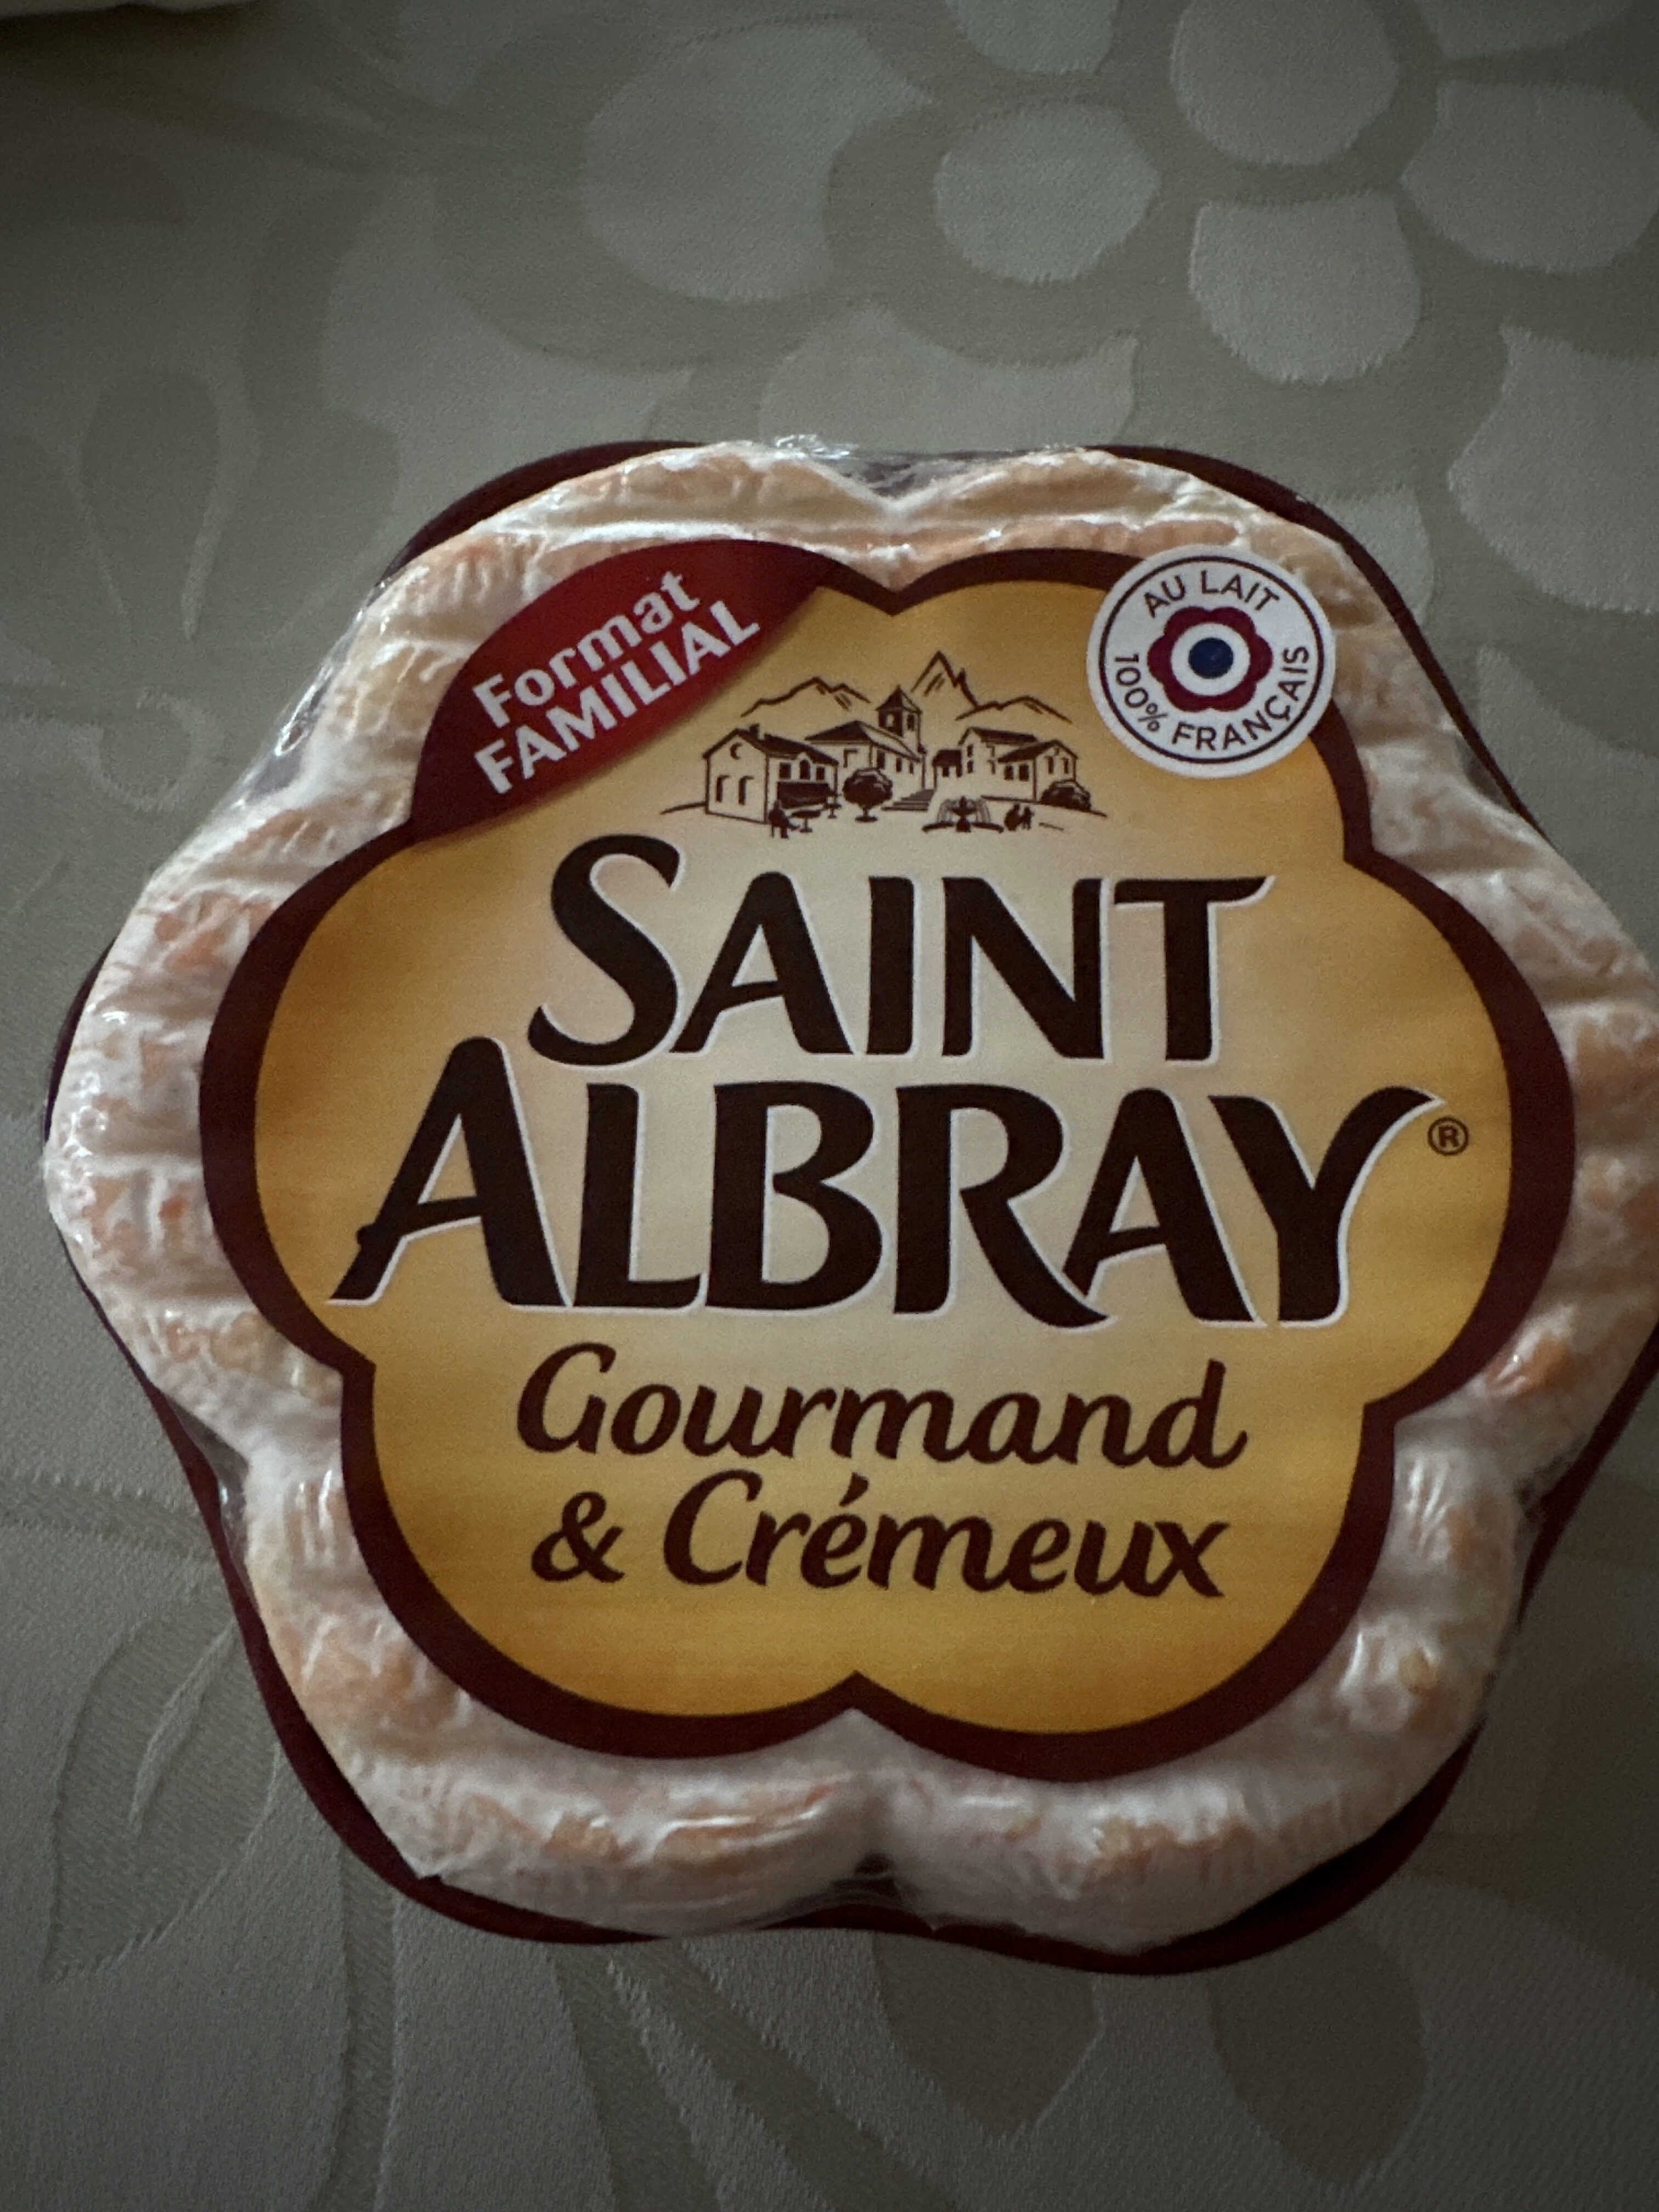 Saint Albray - format familial - Product - fr